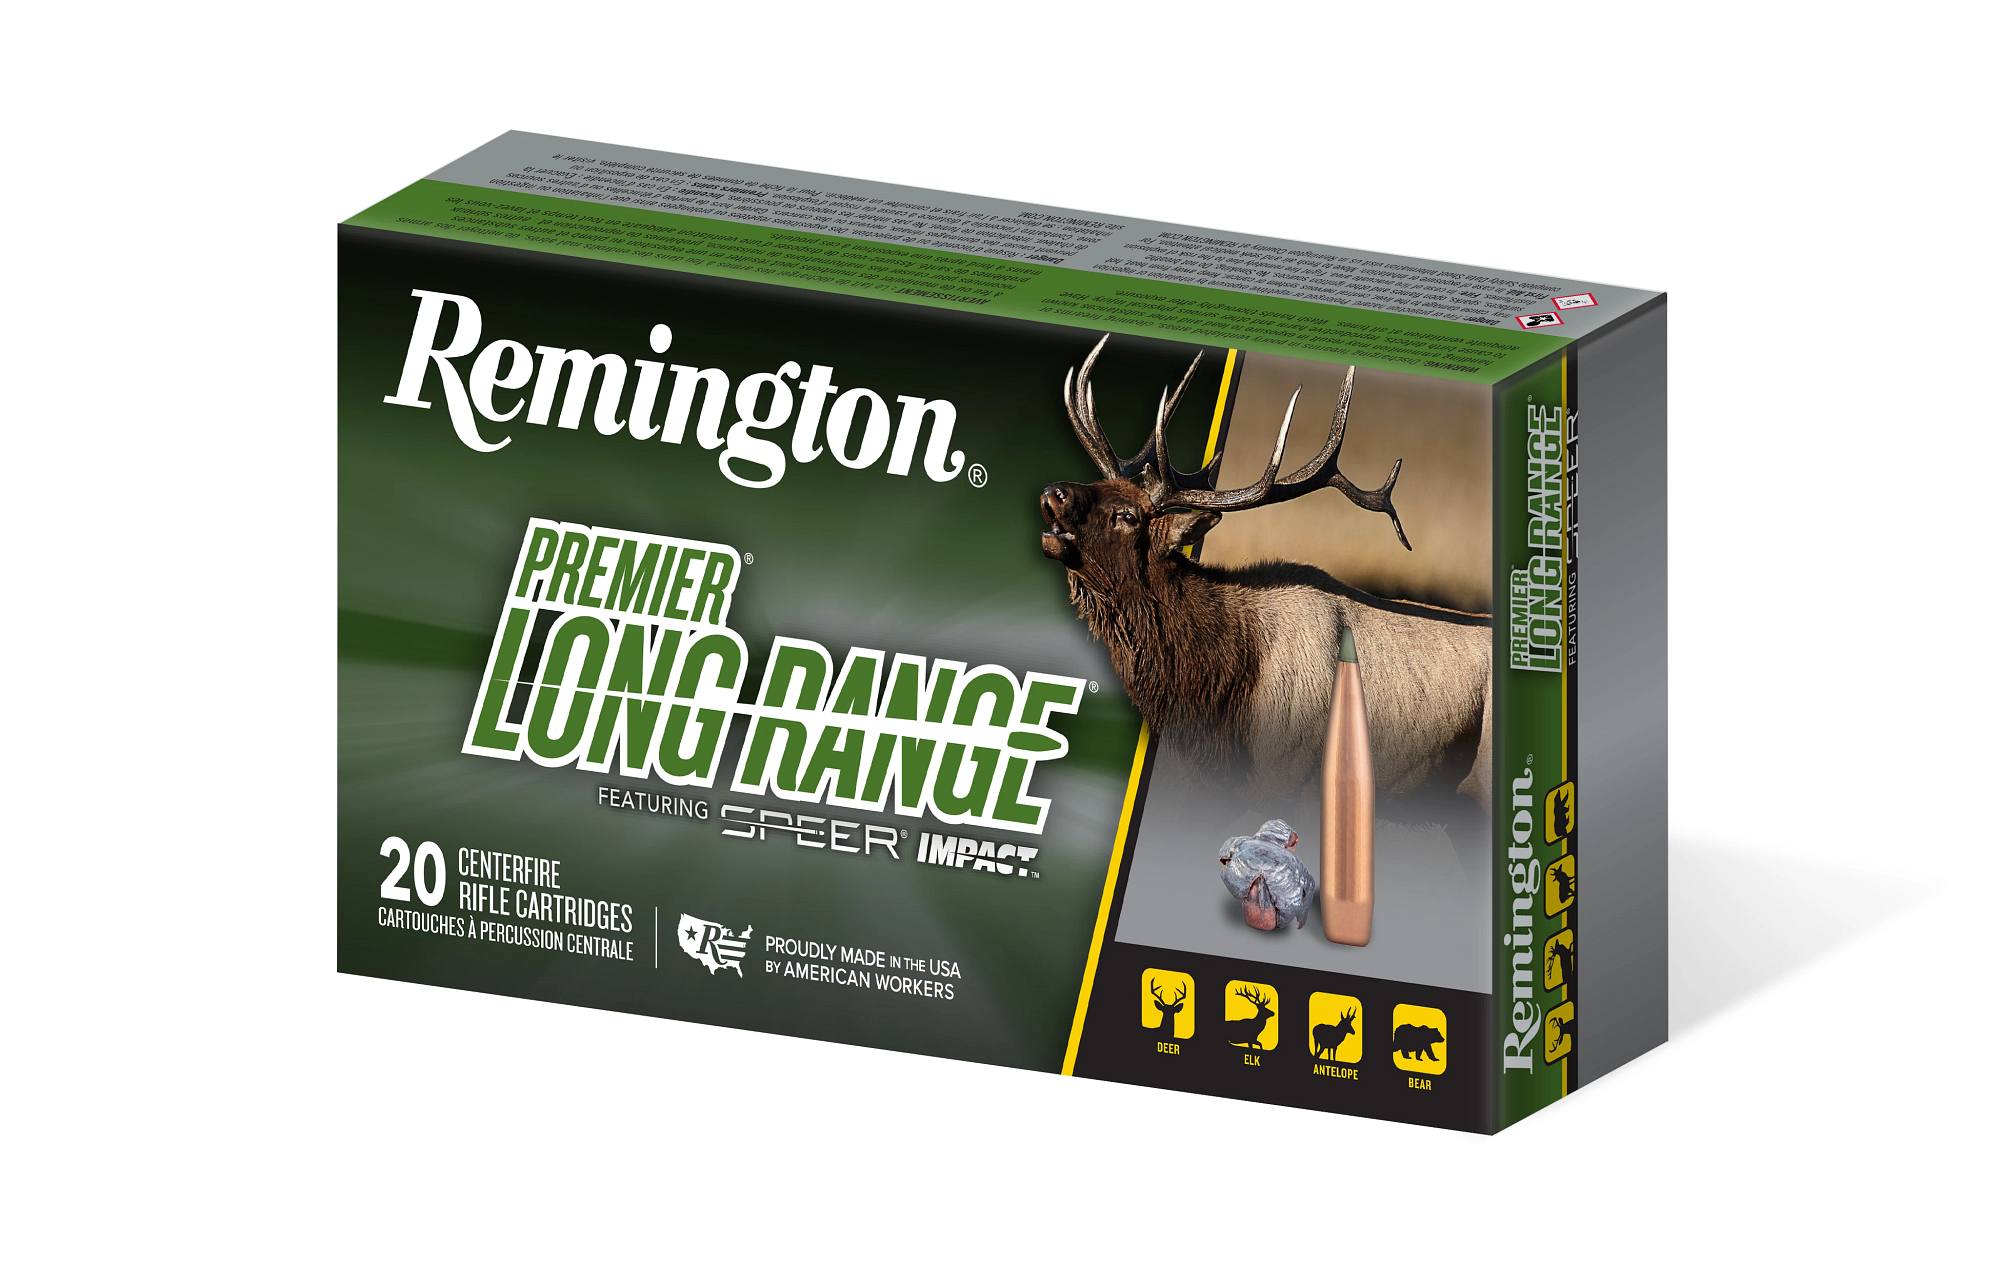 www.remington.com